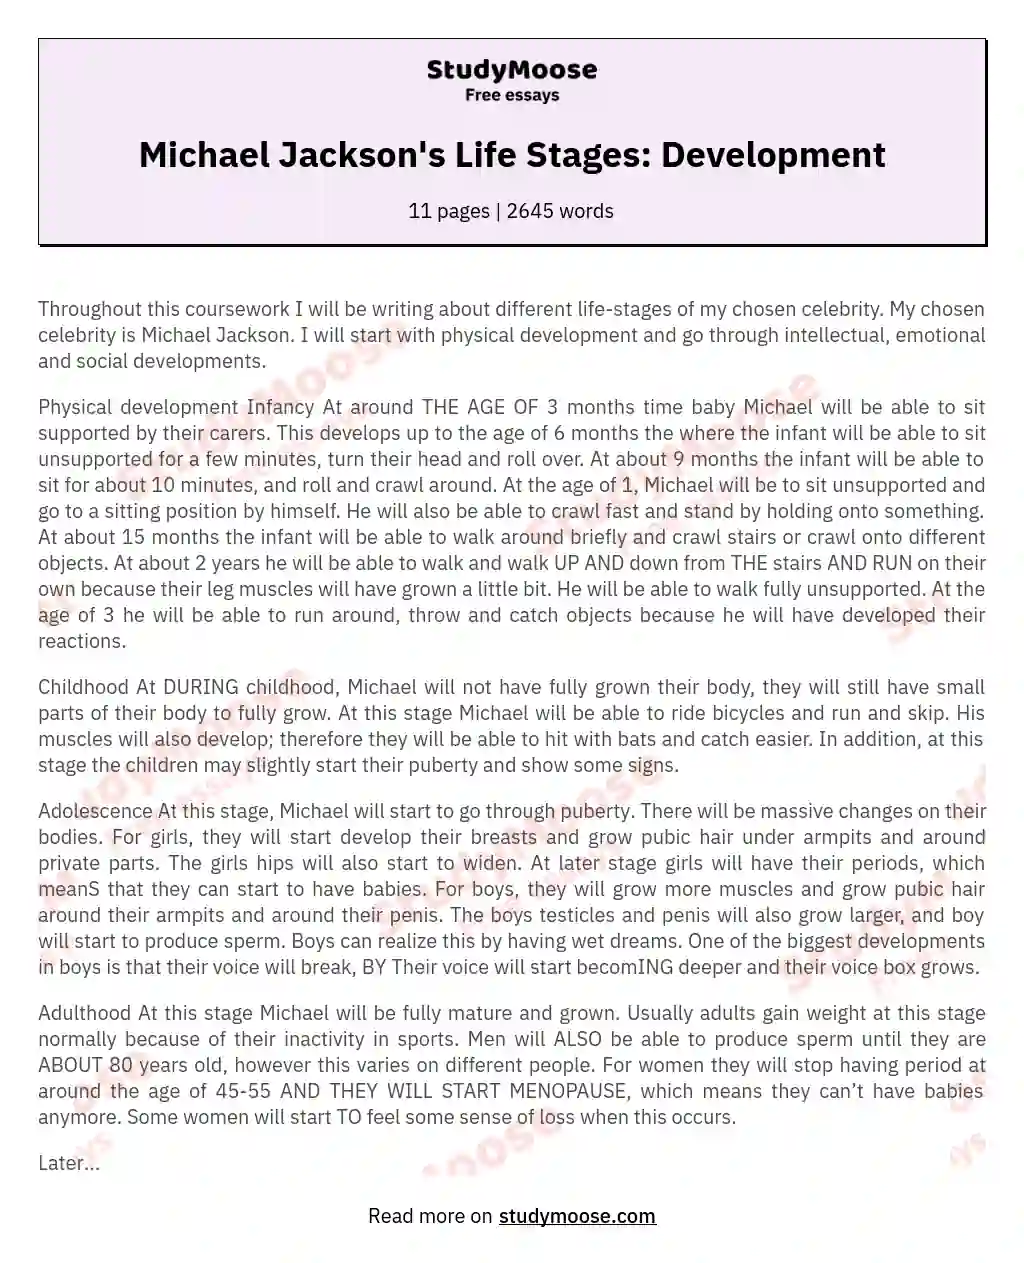 Michael Jackson's Life Stages: Development essay